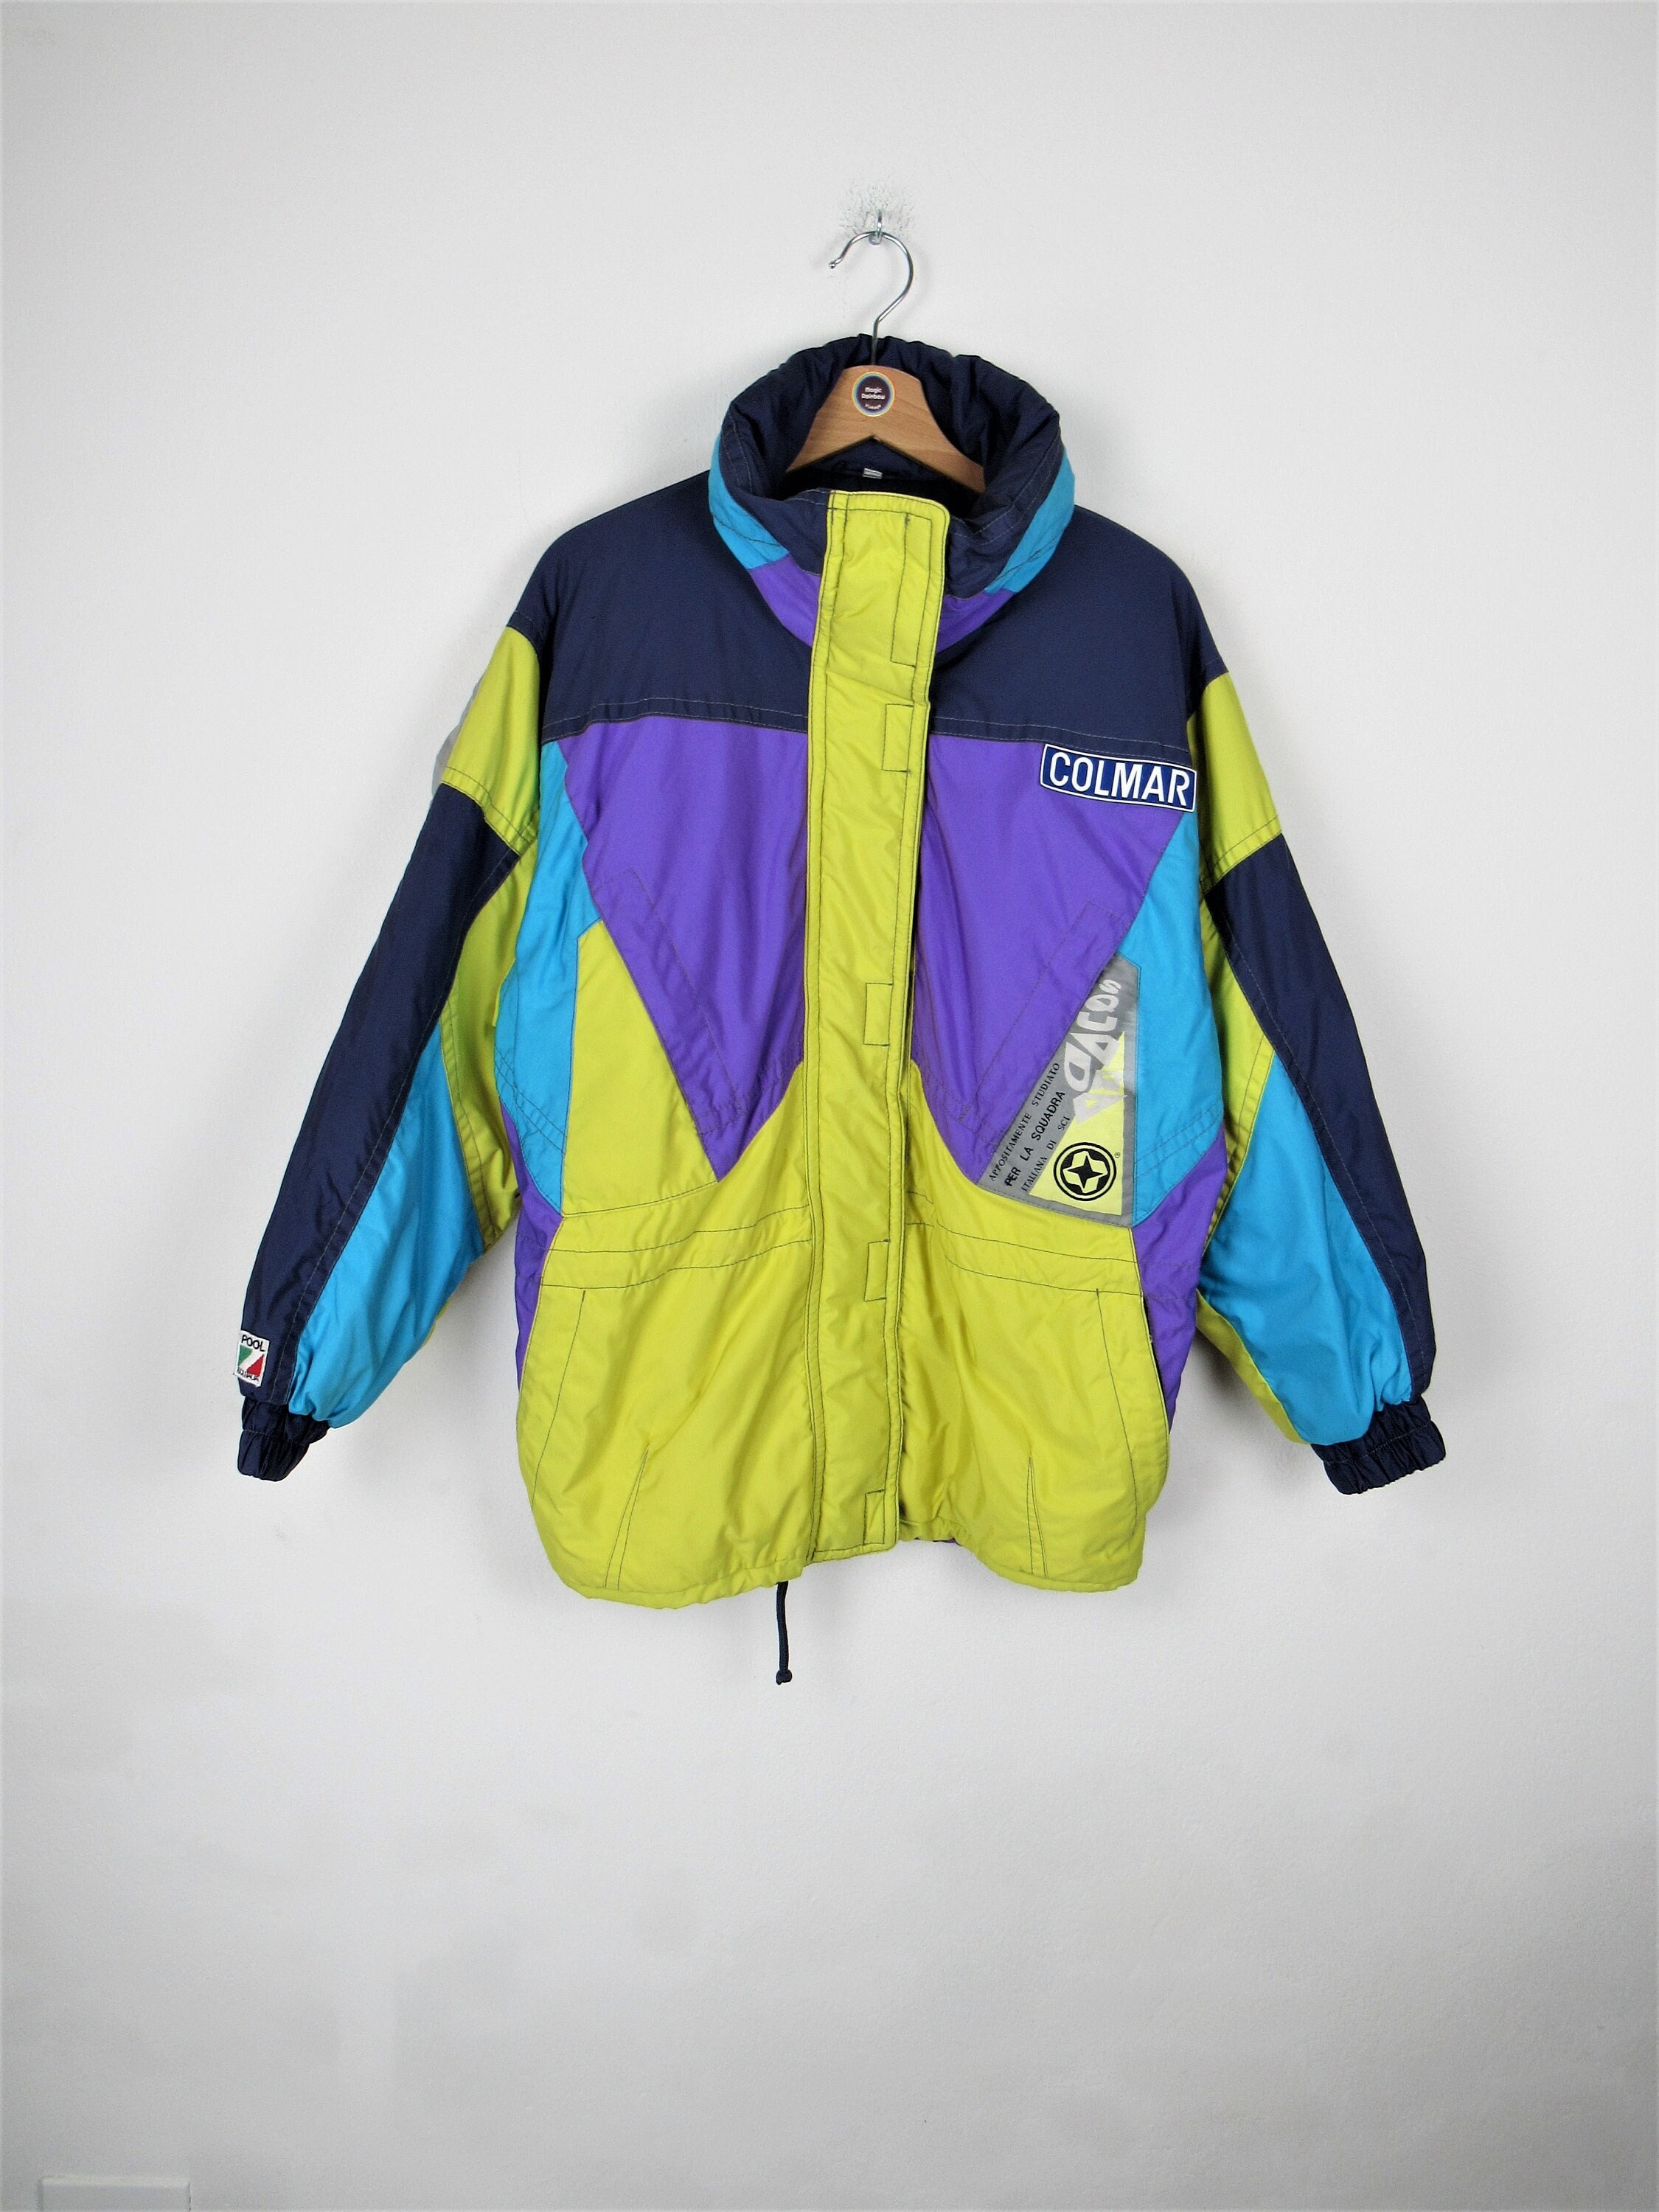 Colmar Vintage 90s Ski Jacket Size